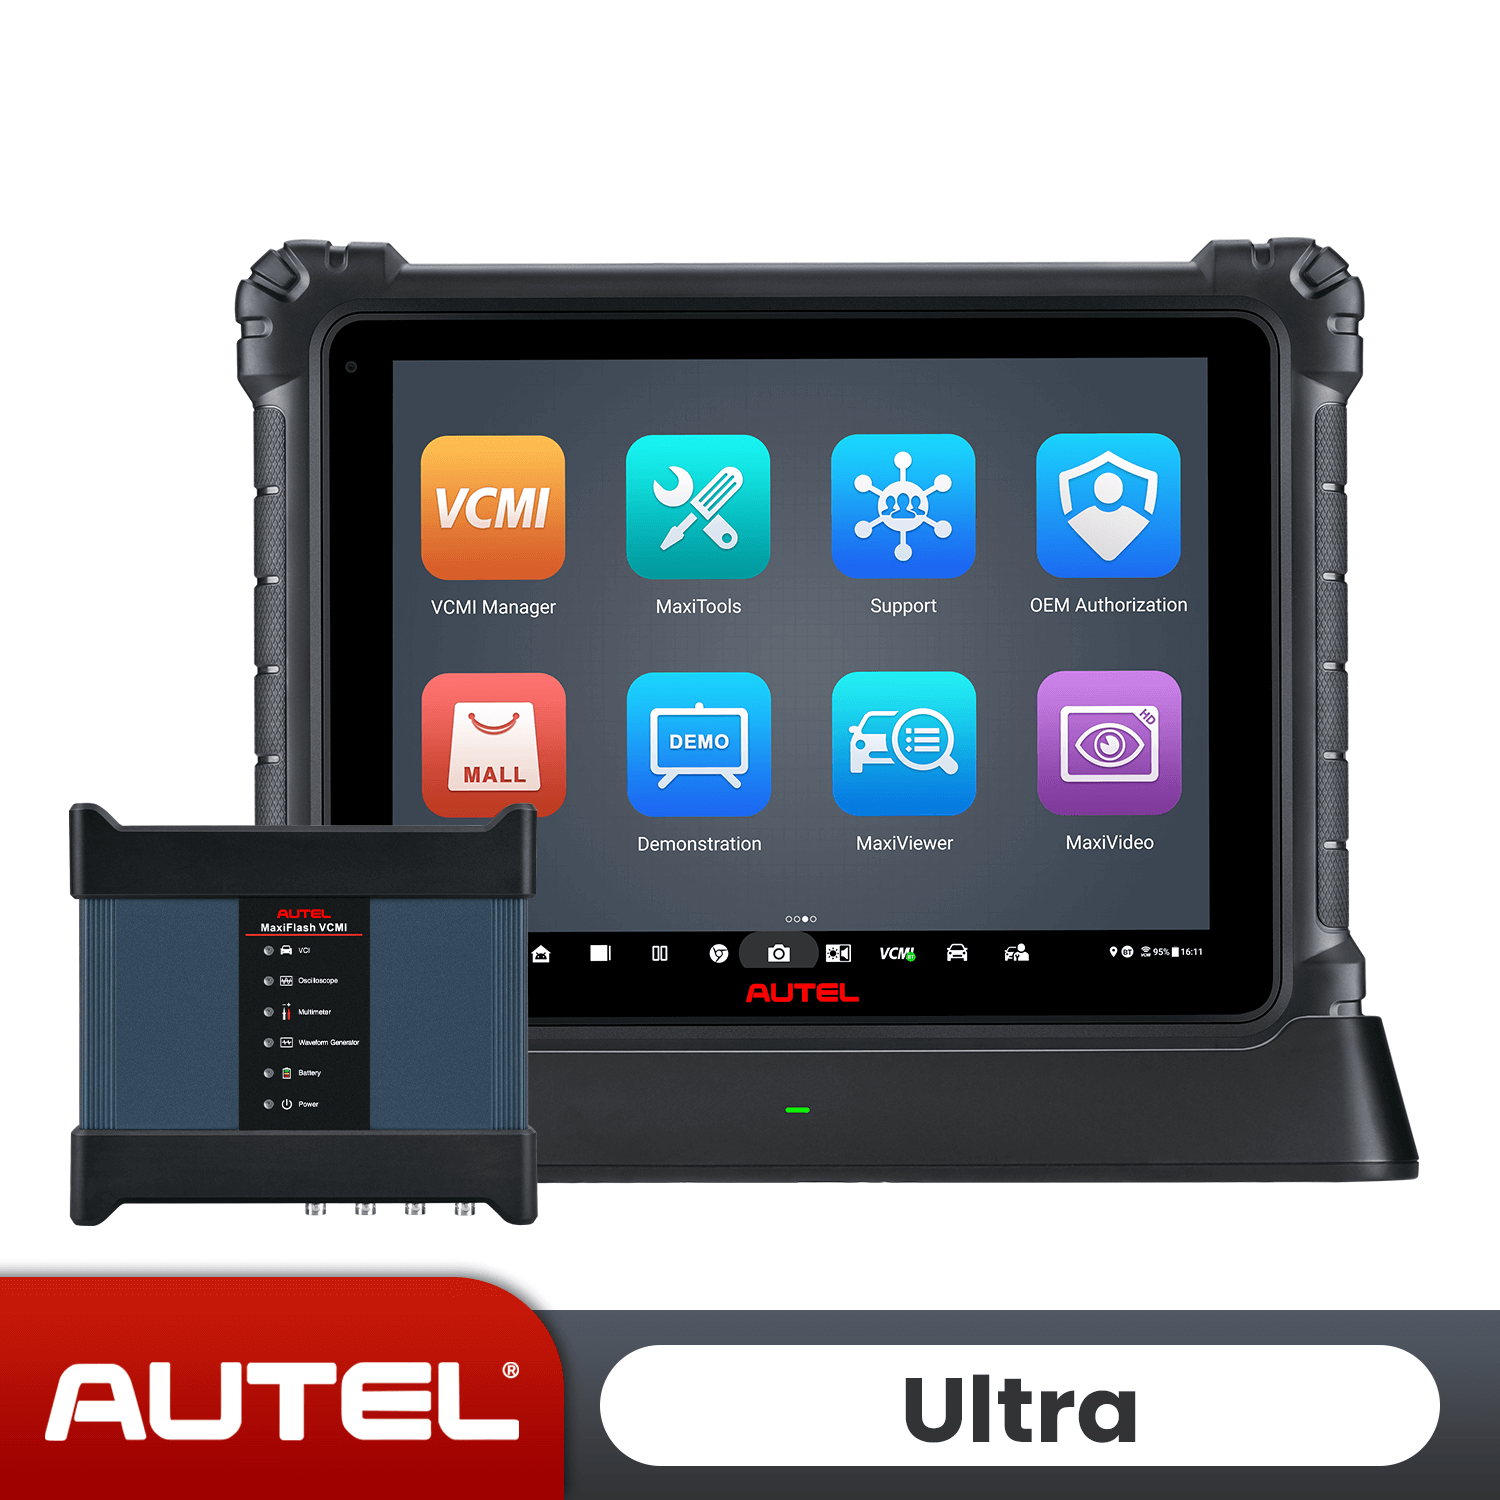 Autel's most ambitious Ultra diagnostics tablet